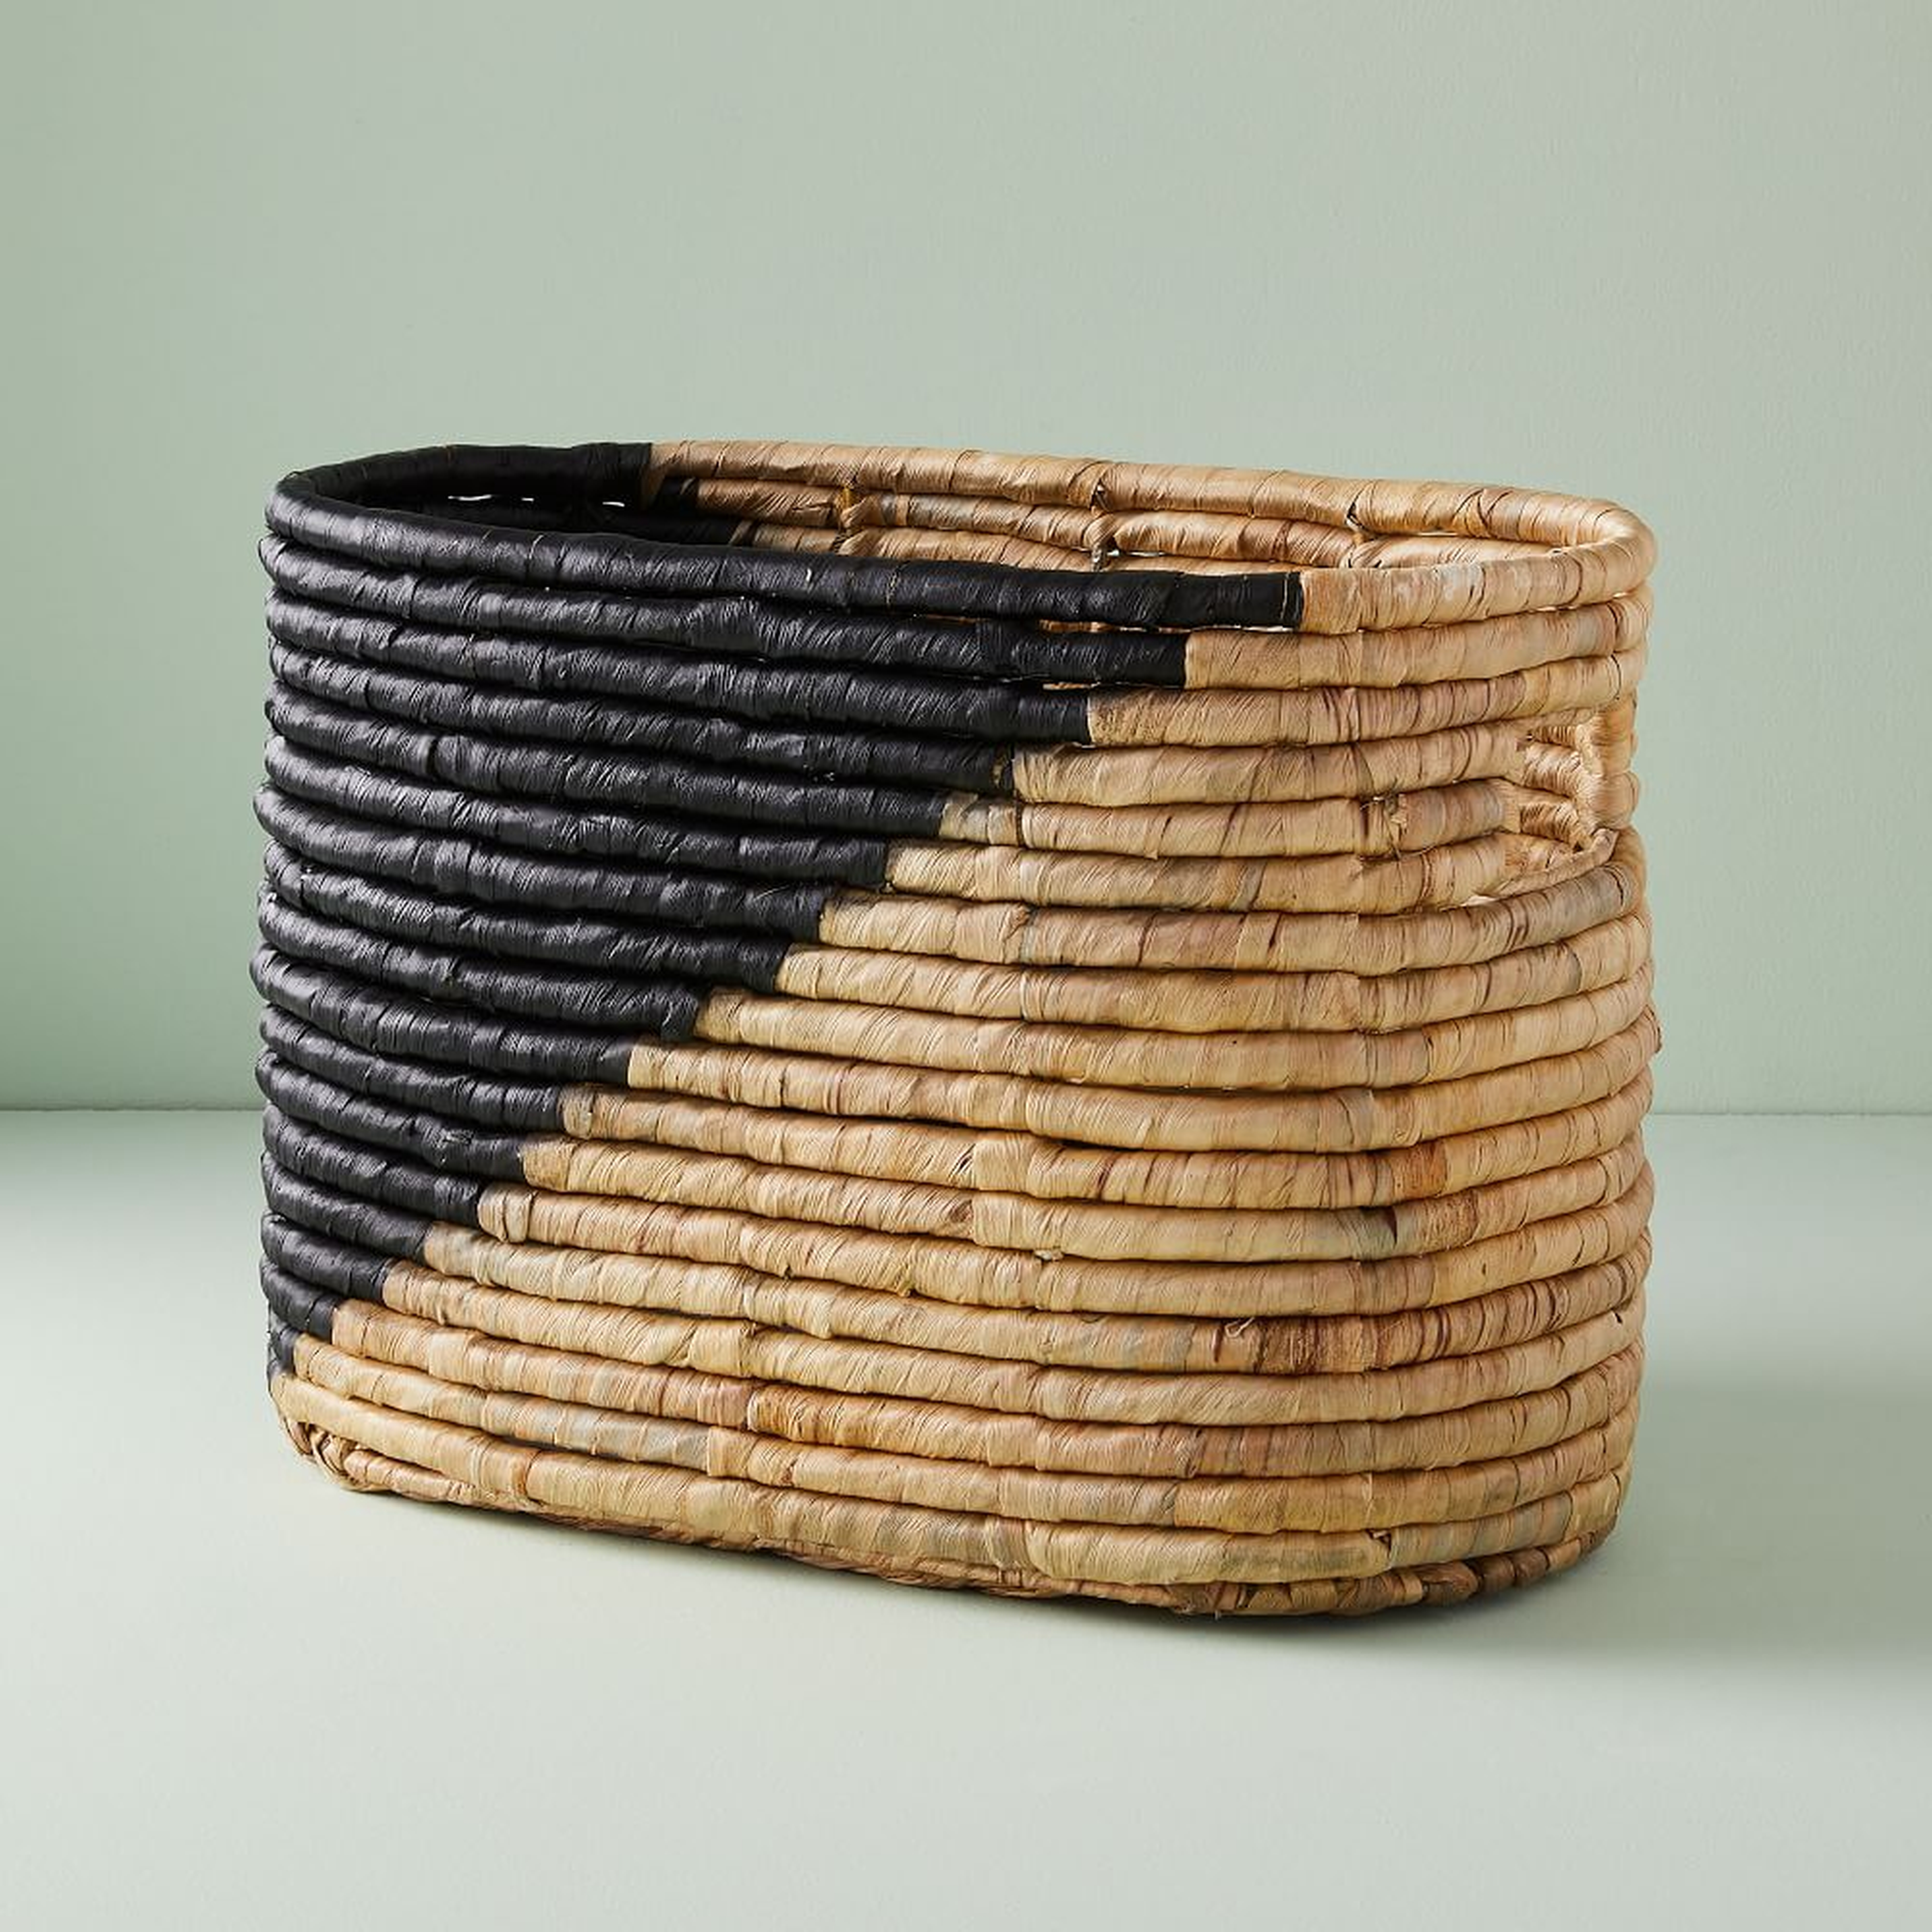 Woven Seagrass Magazine Basket, Natural/Black - West Elm